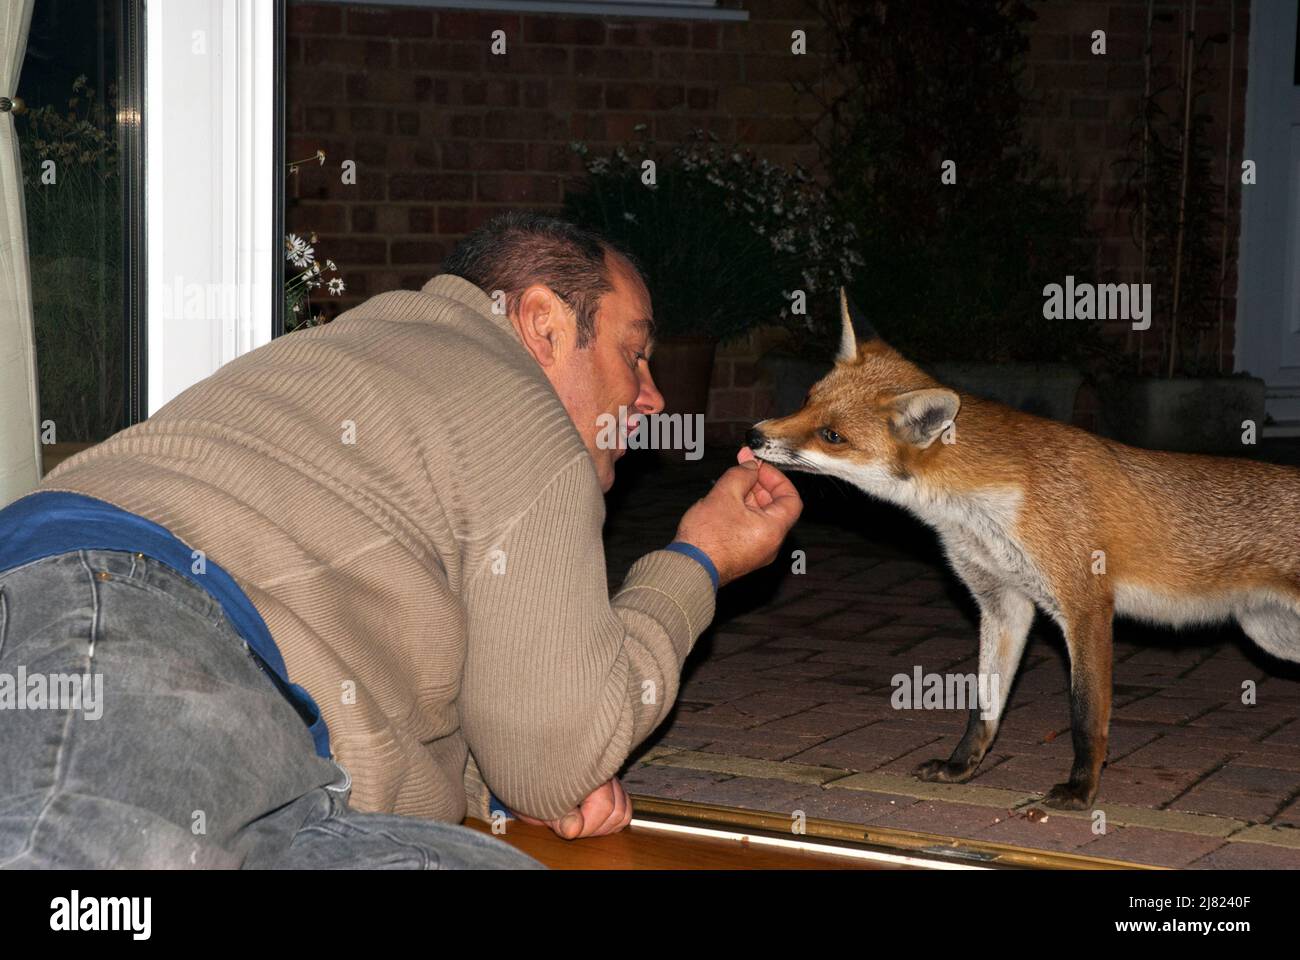 Feeding a fox in the patio at night. Stock Photo